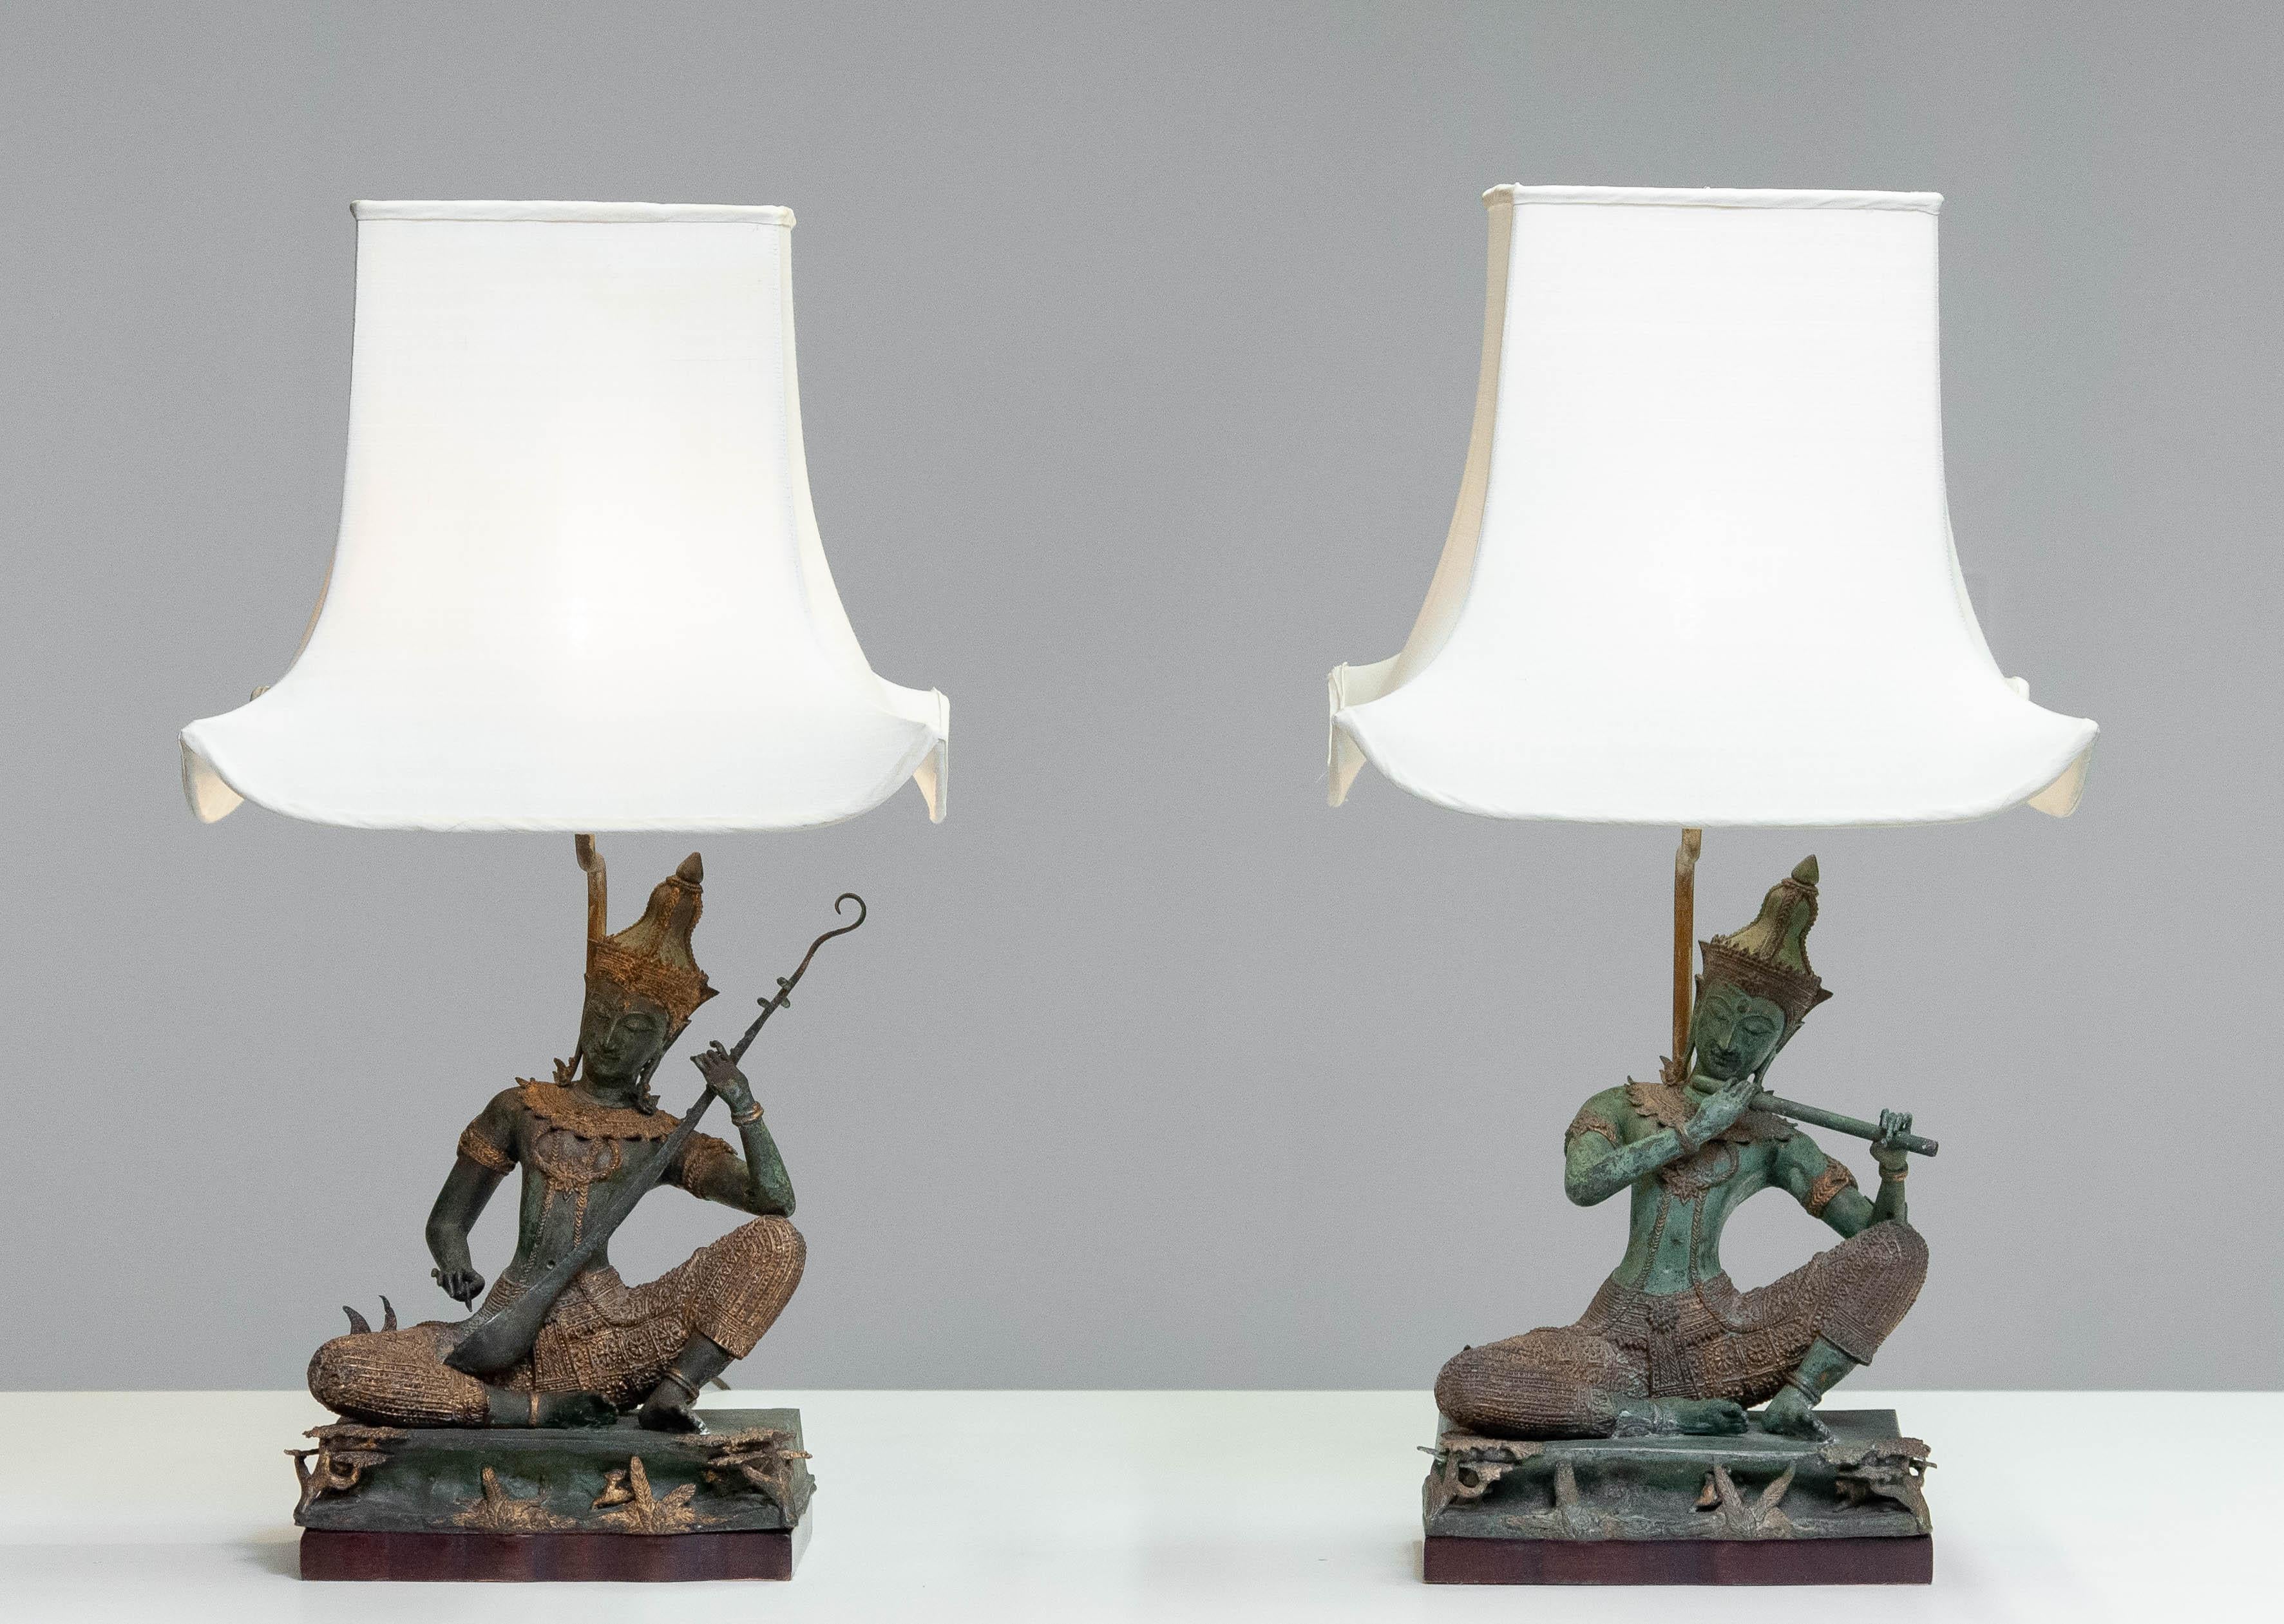 Thai Bronze Lamp - 8 For Sale on 1stDibs